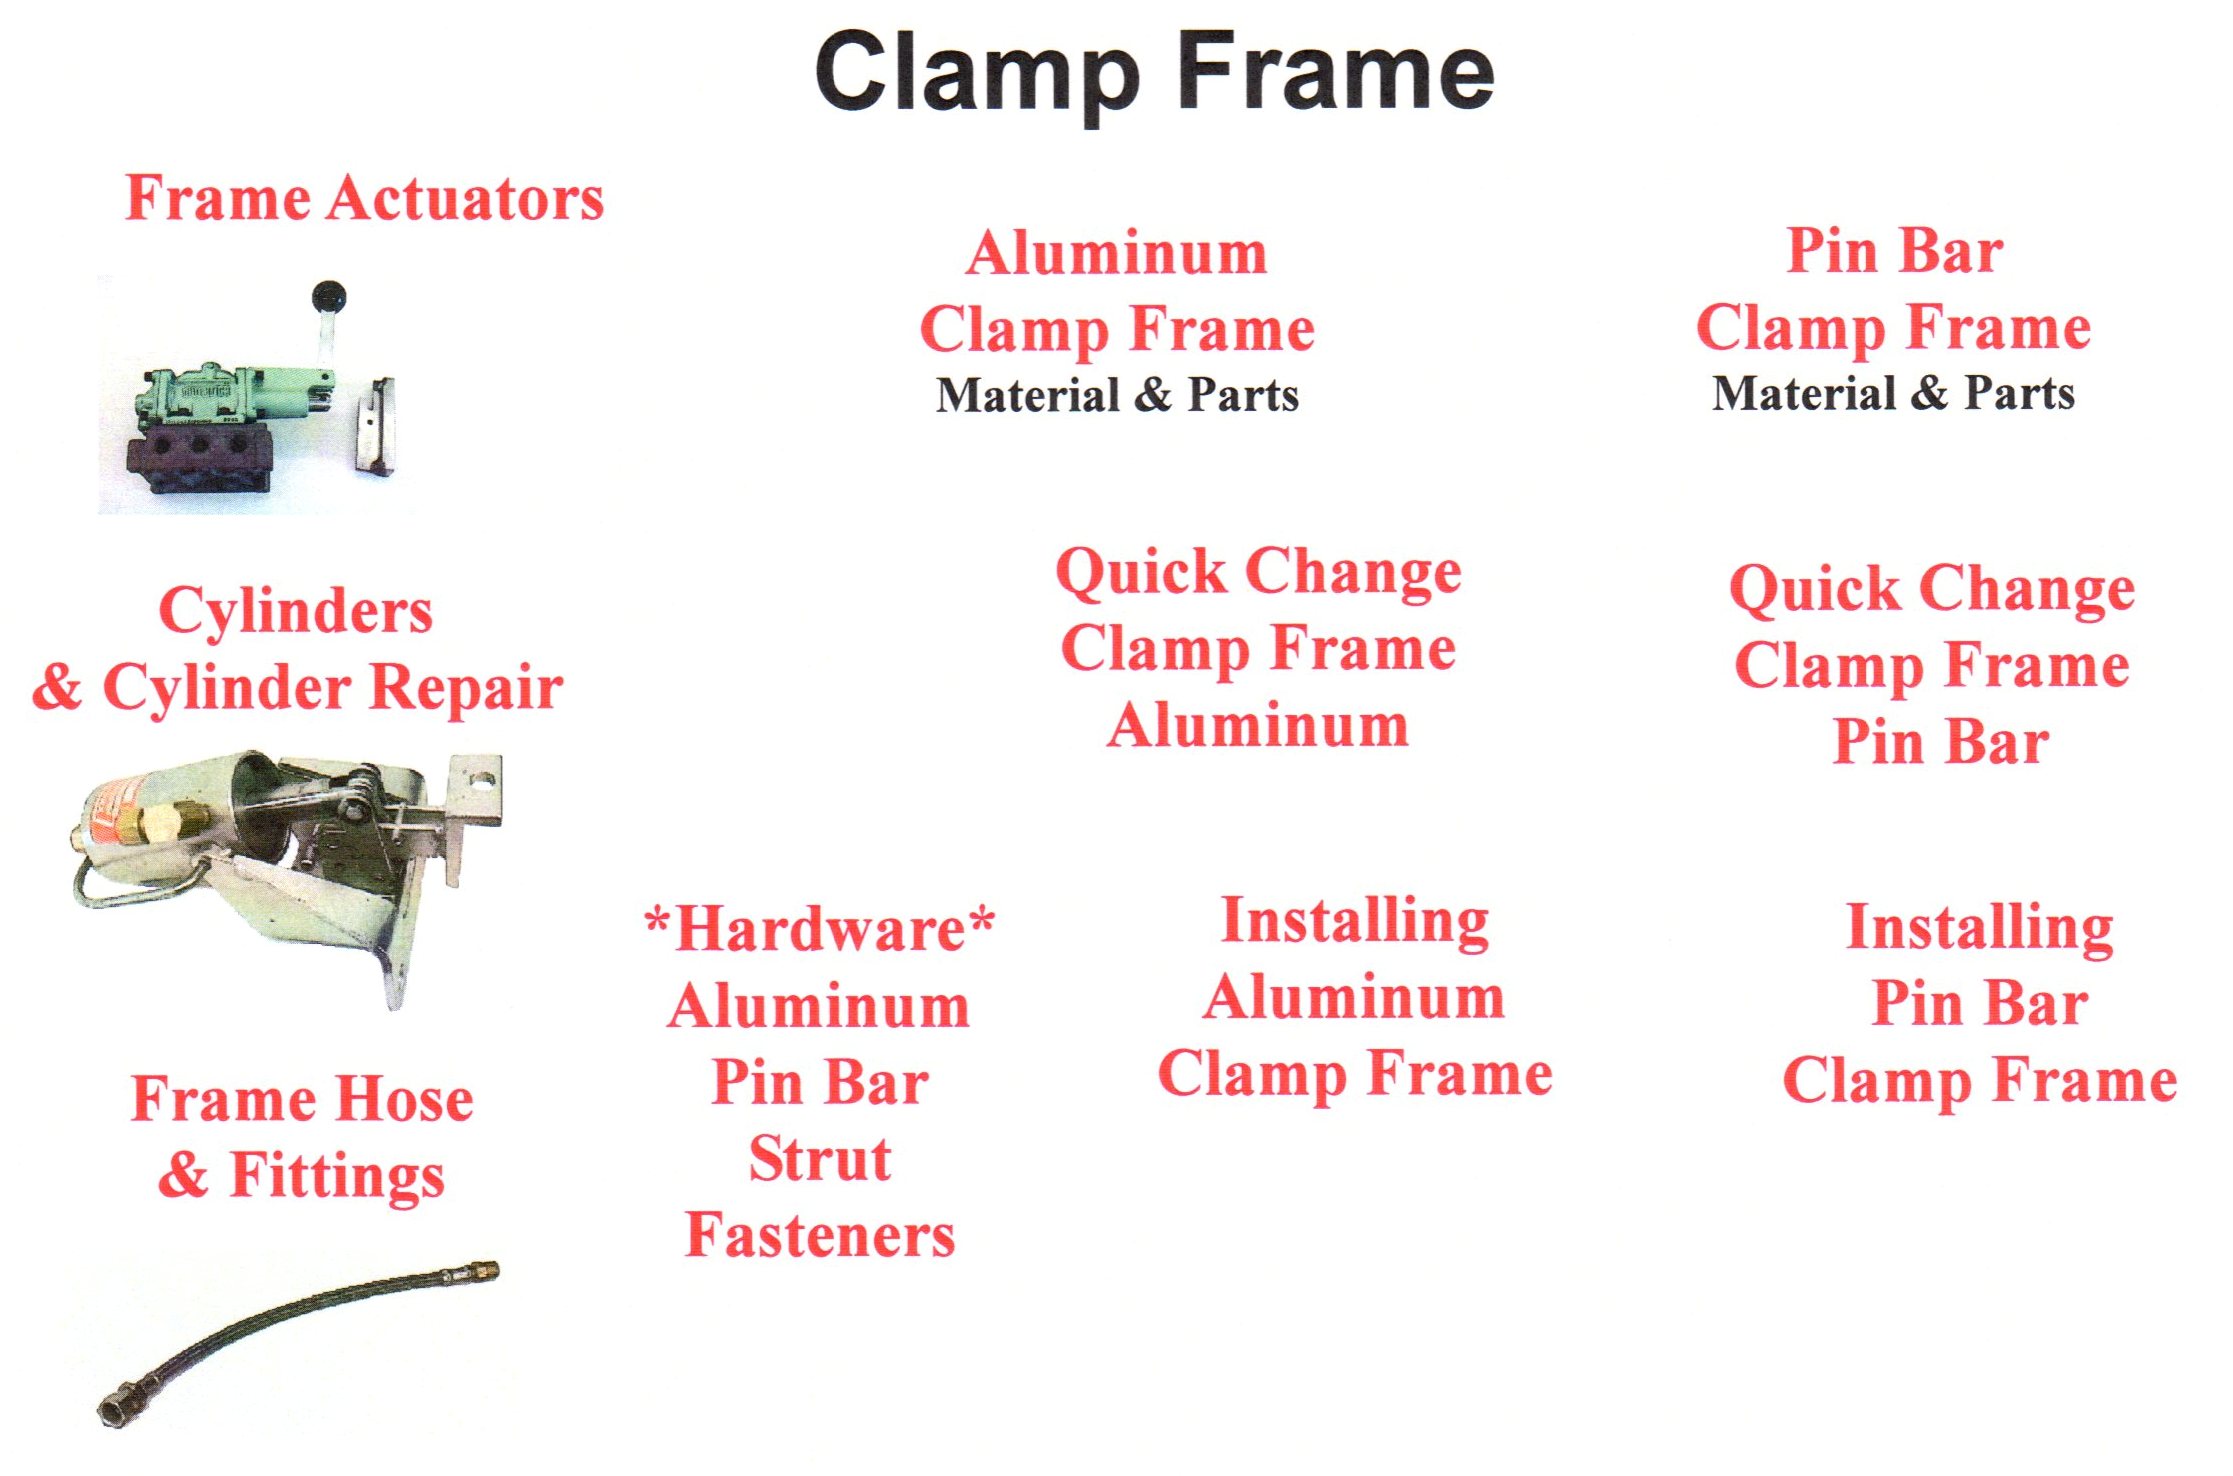 Clamp Frames